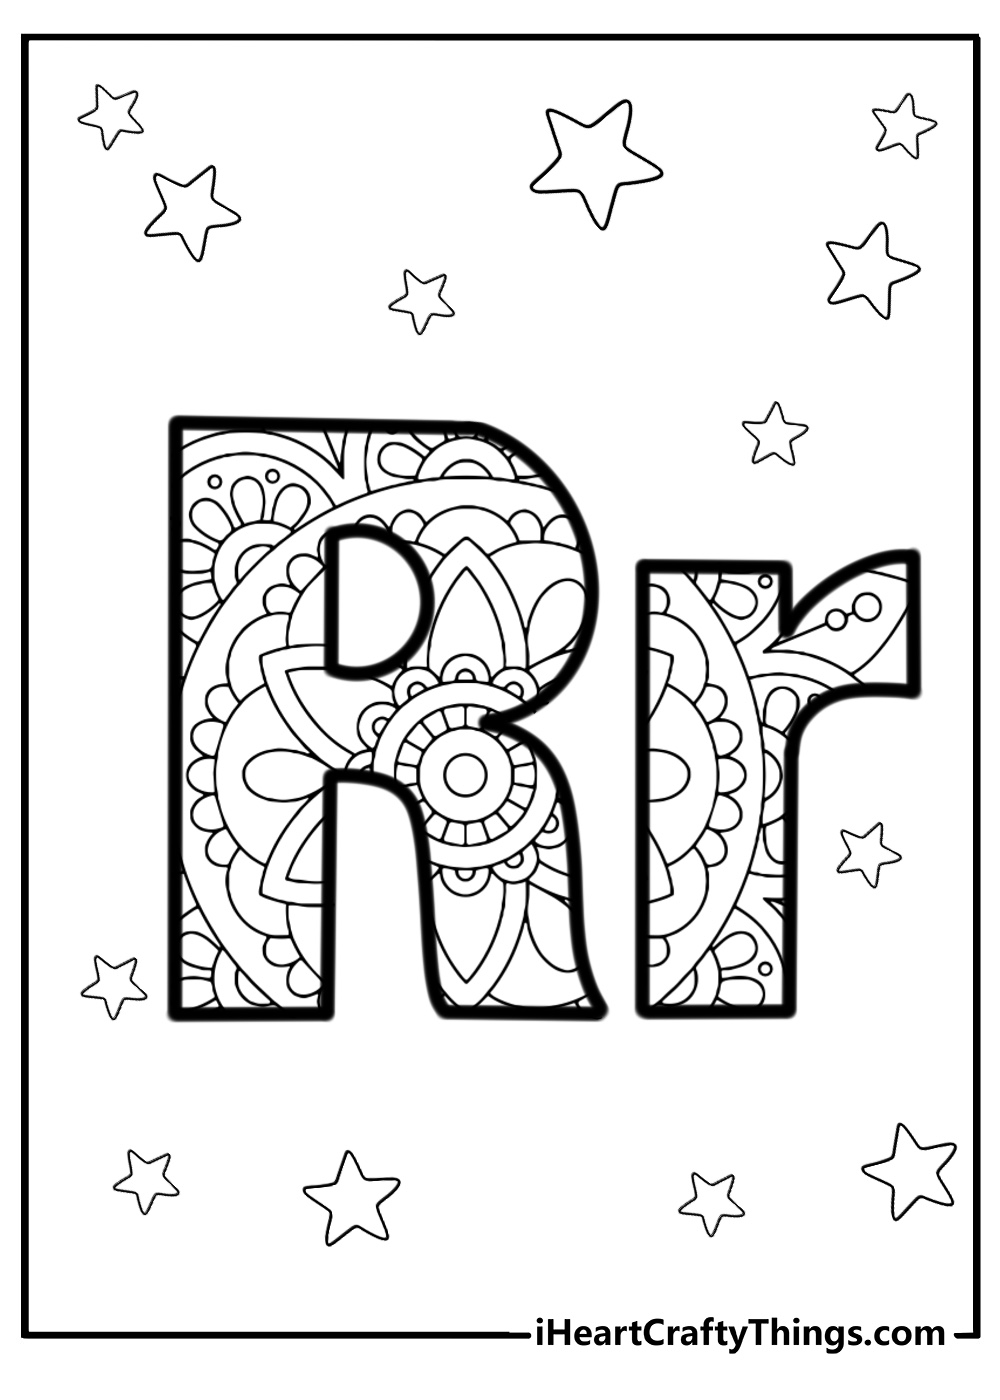 Detailed letter r coloring sheet